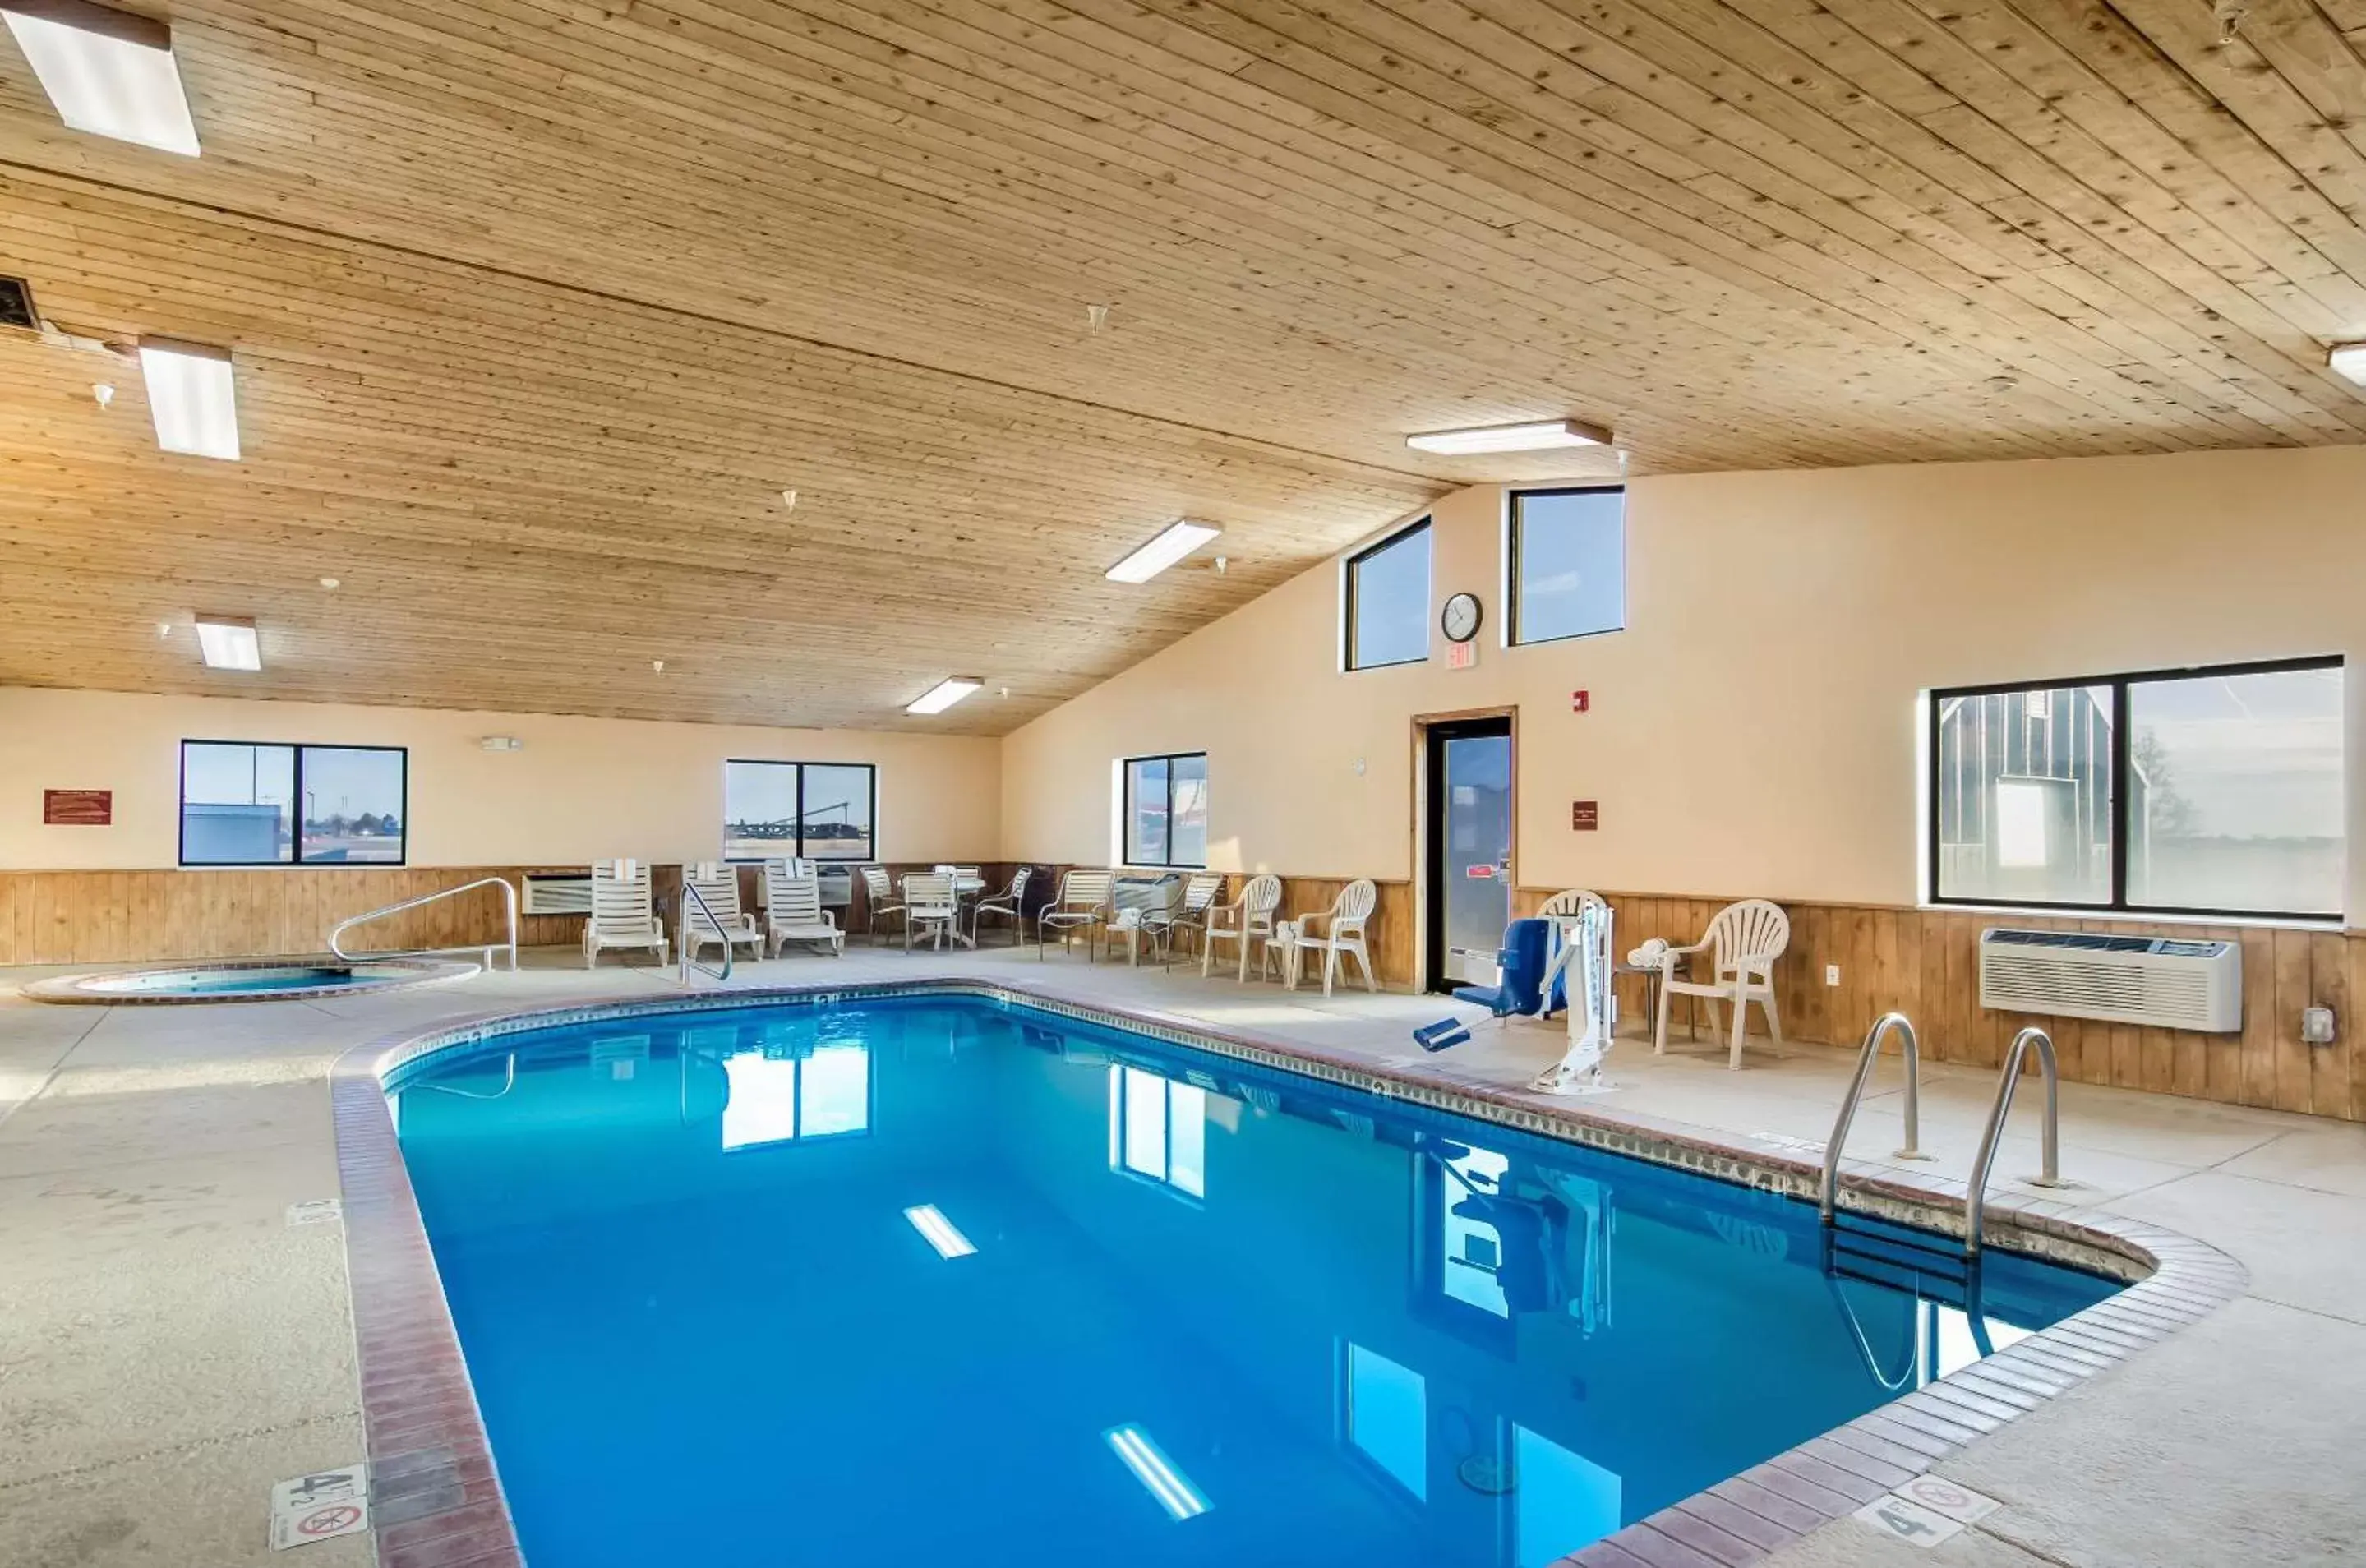 On site, Swimming Pool in Quality Inn Goodland, KS near Northwest Kansas Technical College